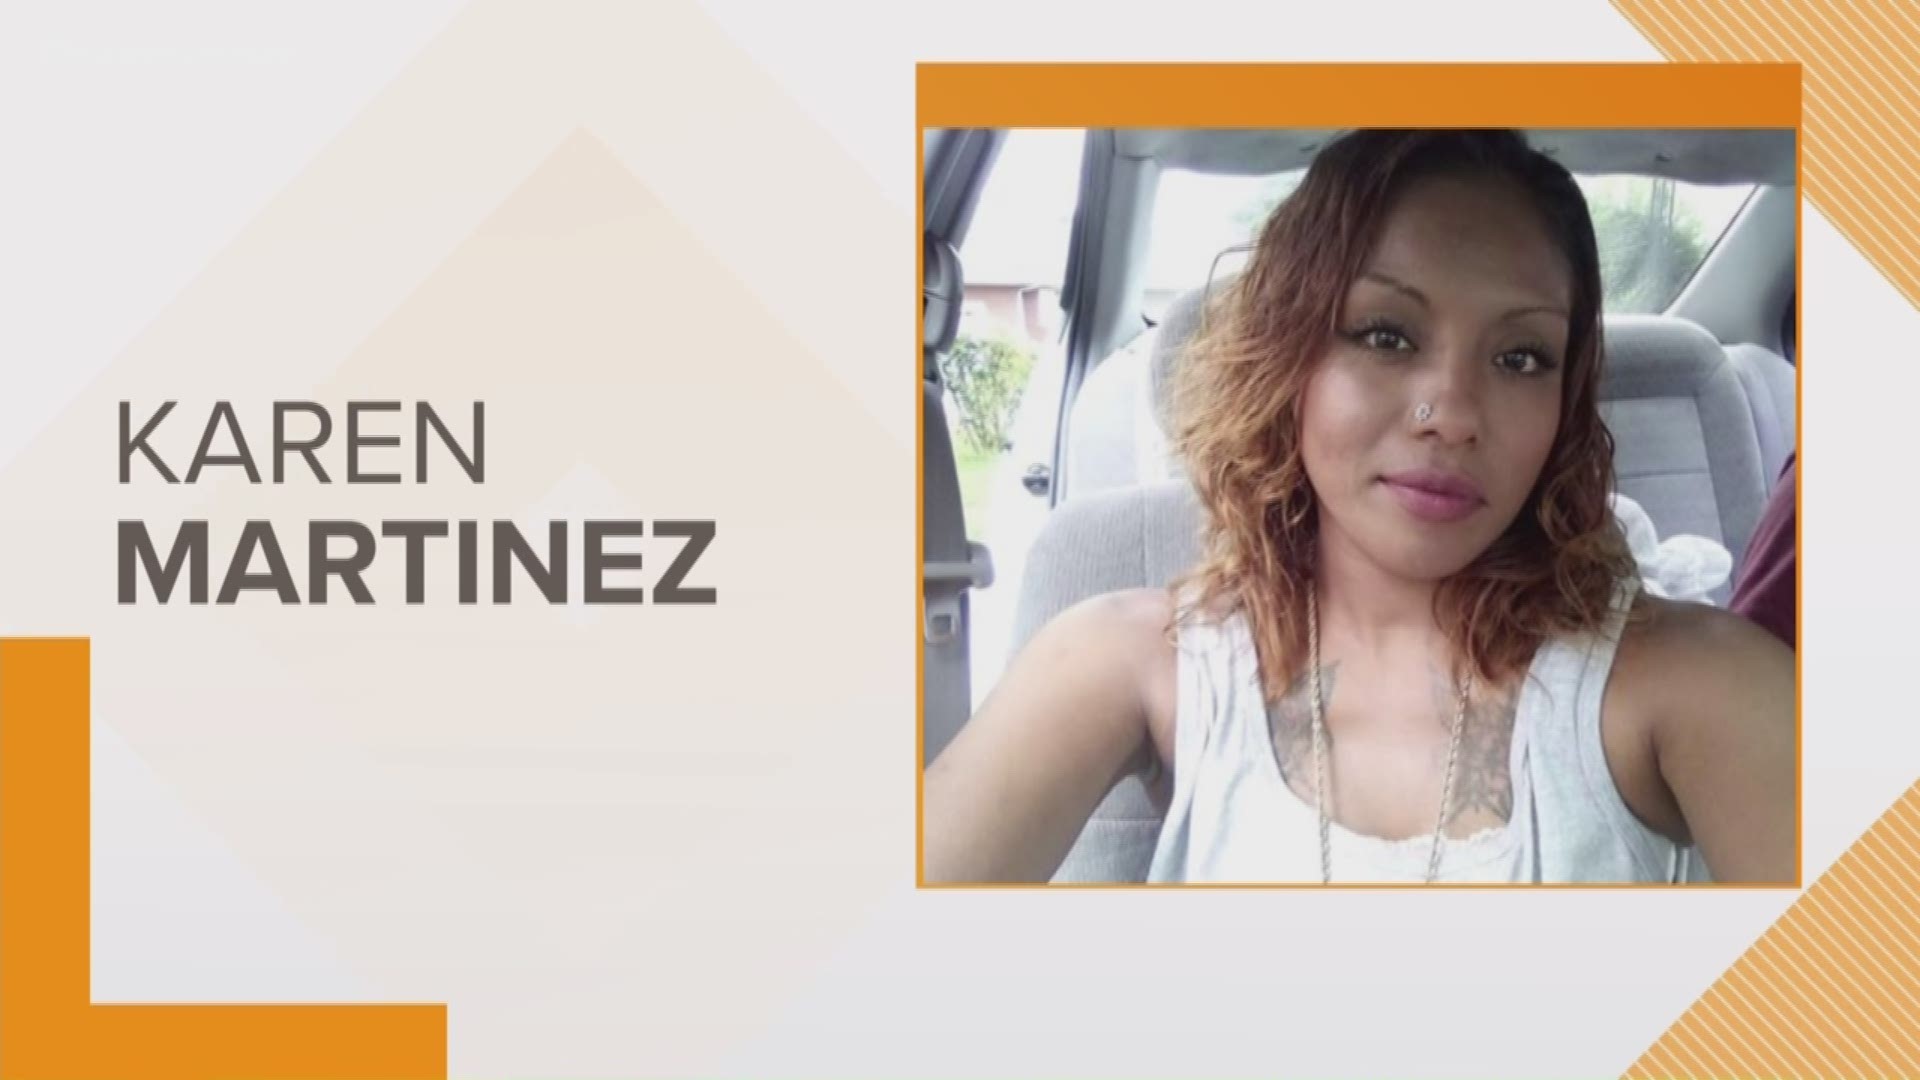 Karen Martinez was last seen on Wednesday, September 11 in the 200 Block of East Main Street.